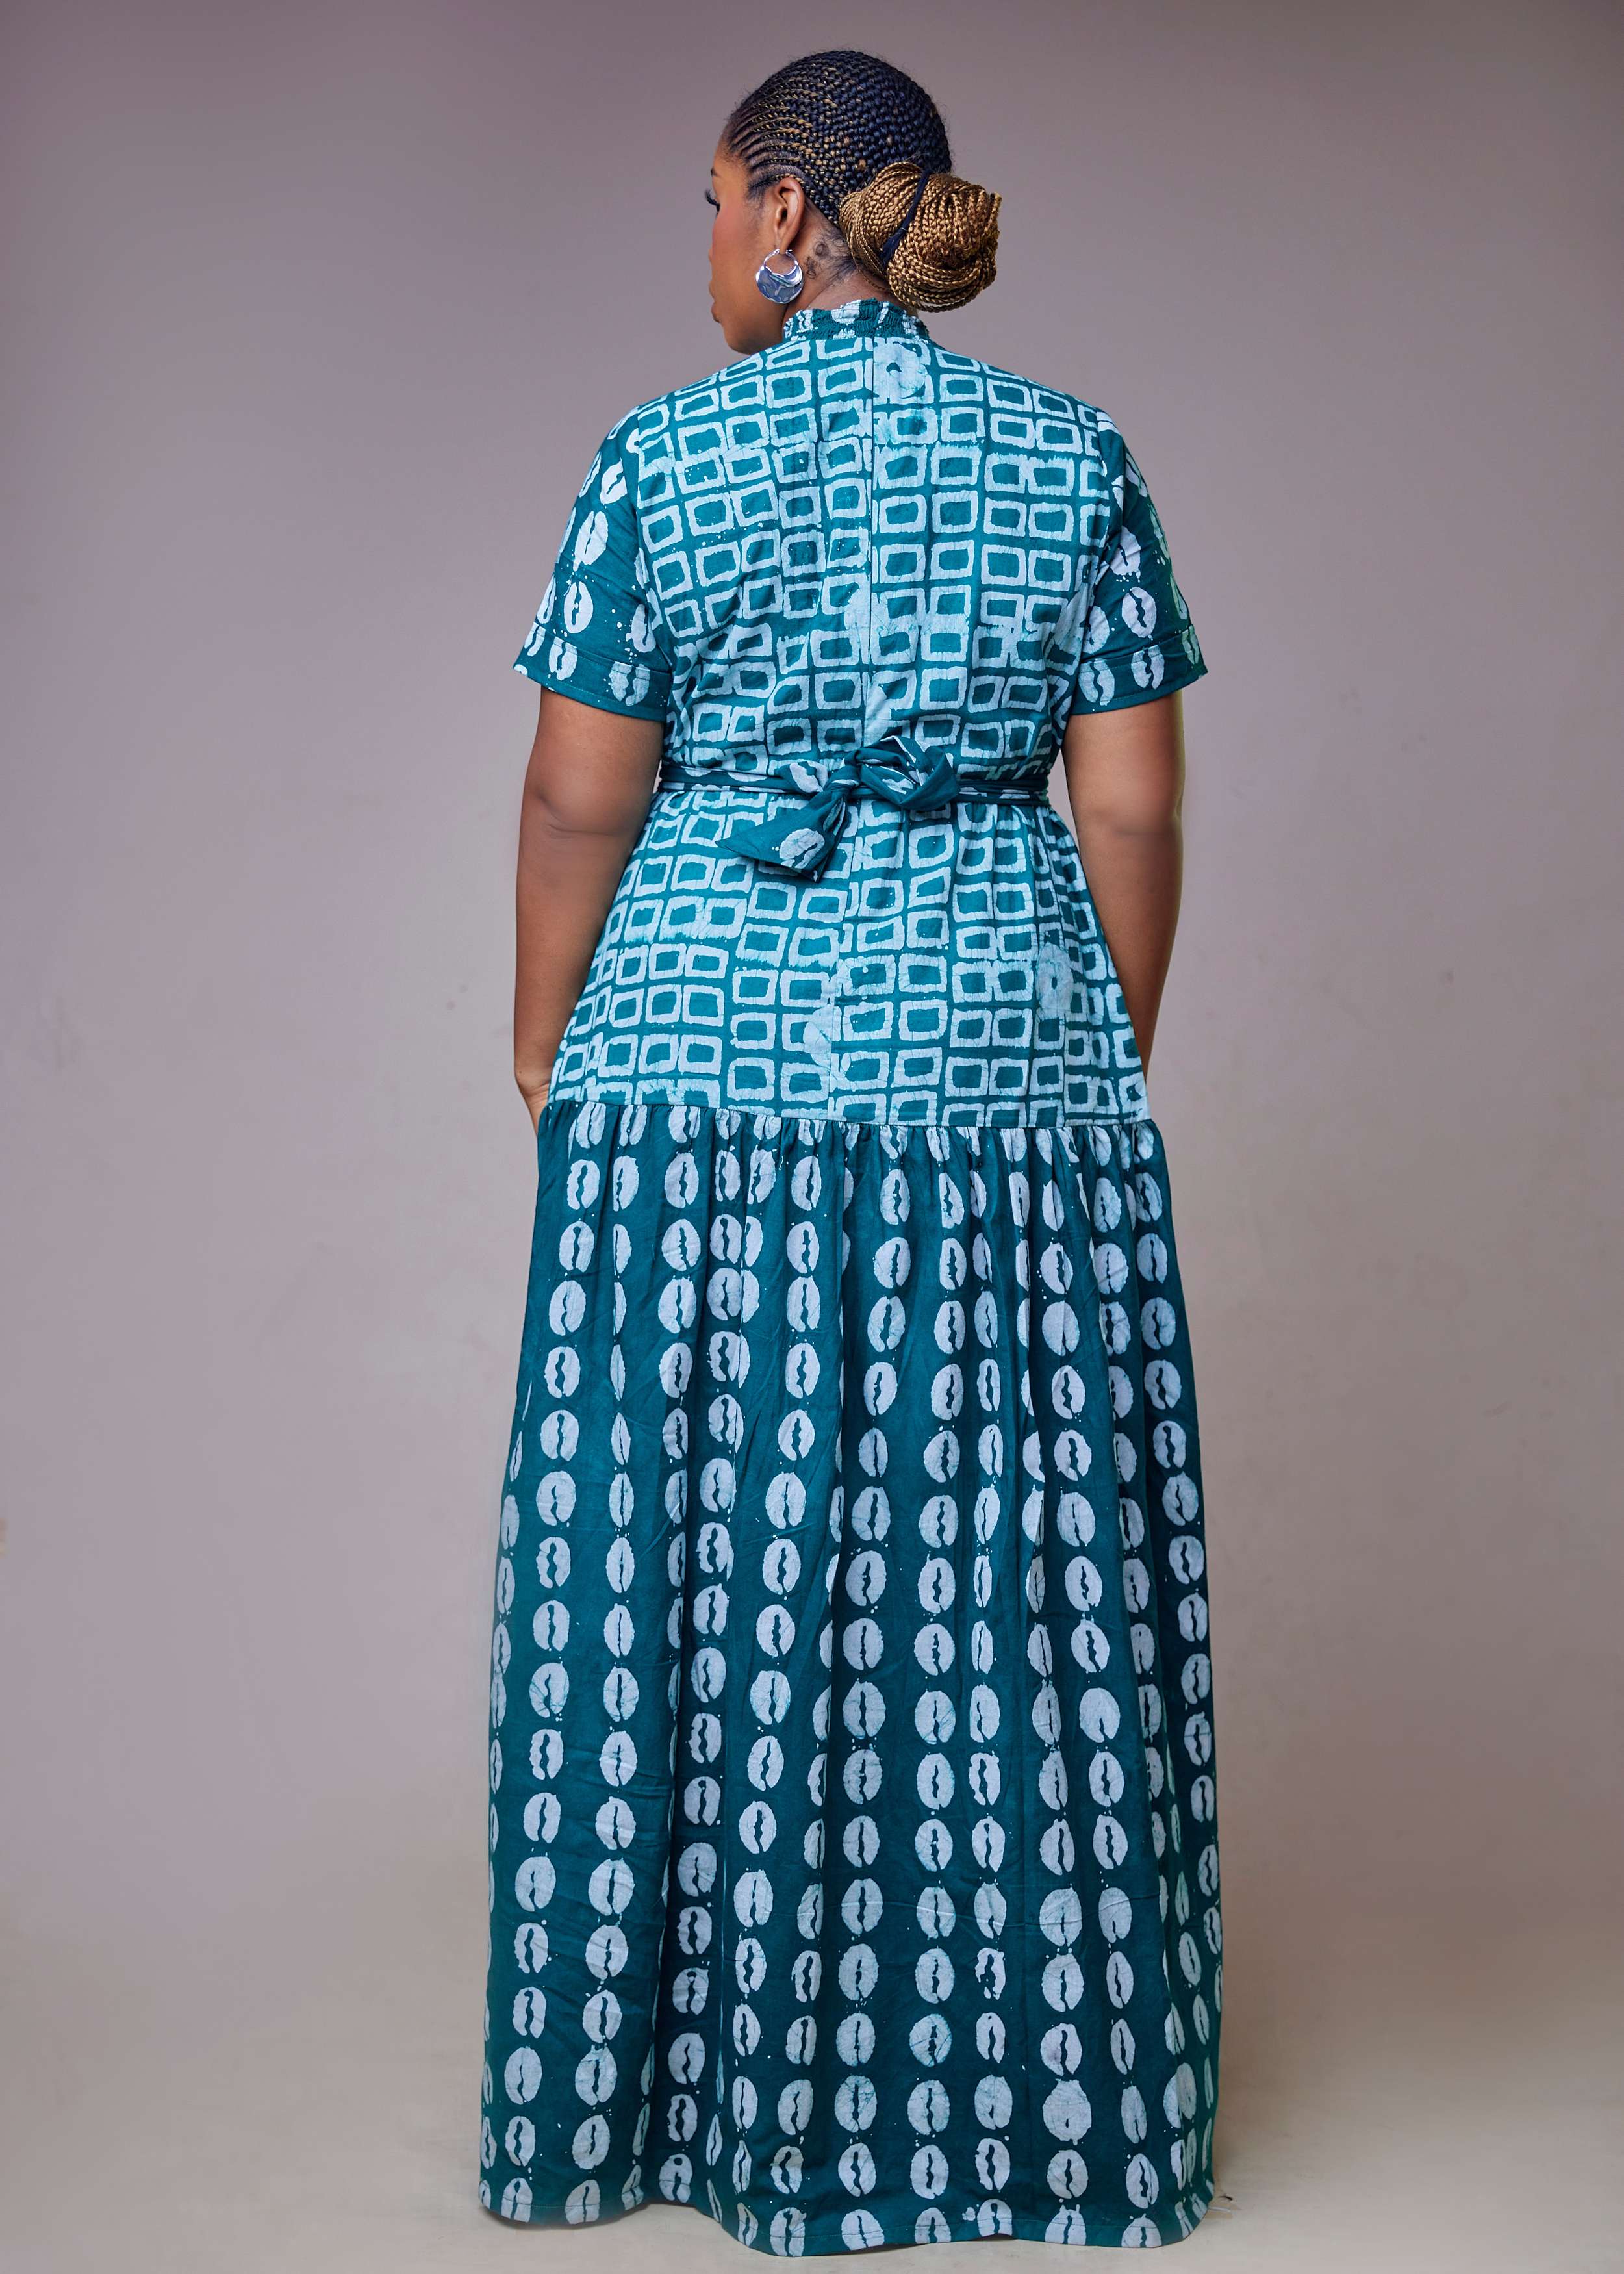 Toyin Maxi Dress (Hand-dyed)